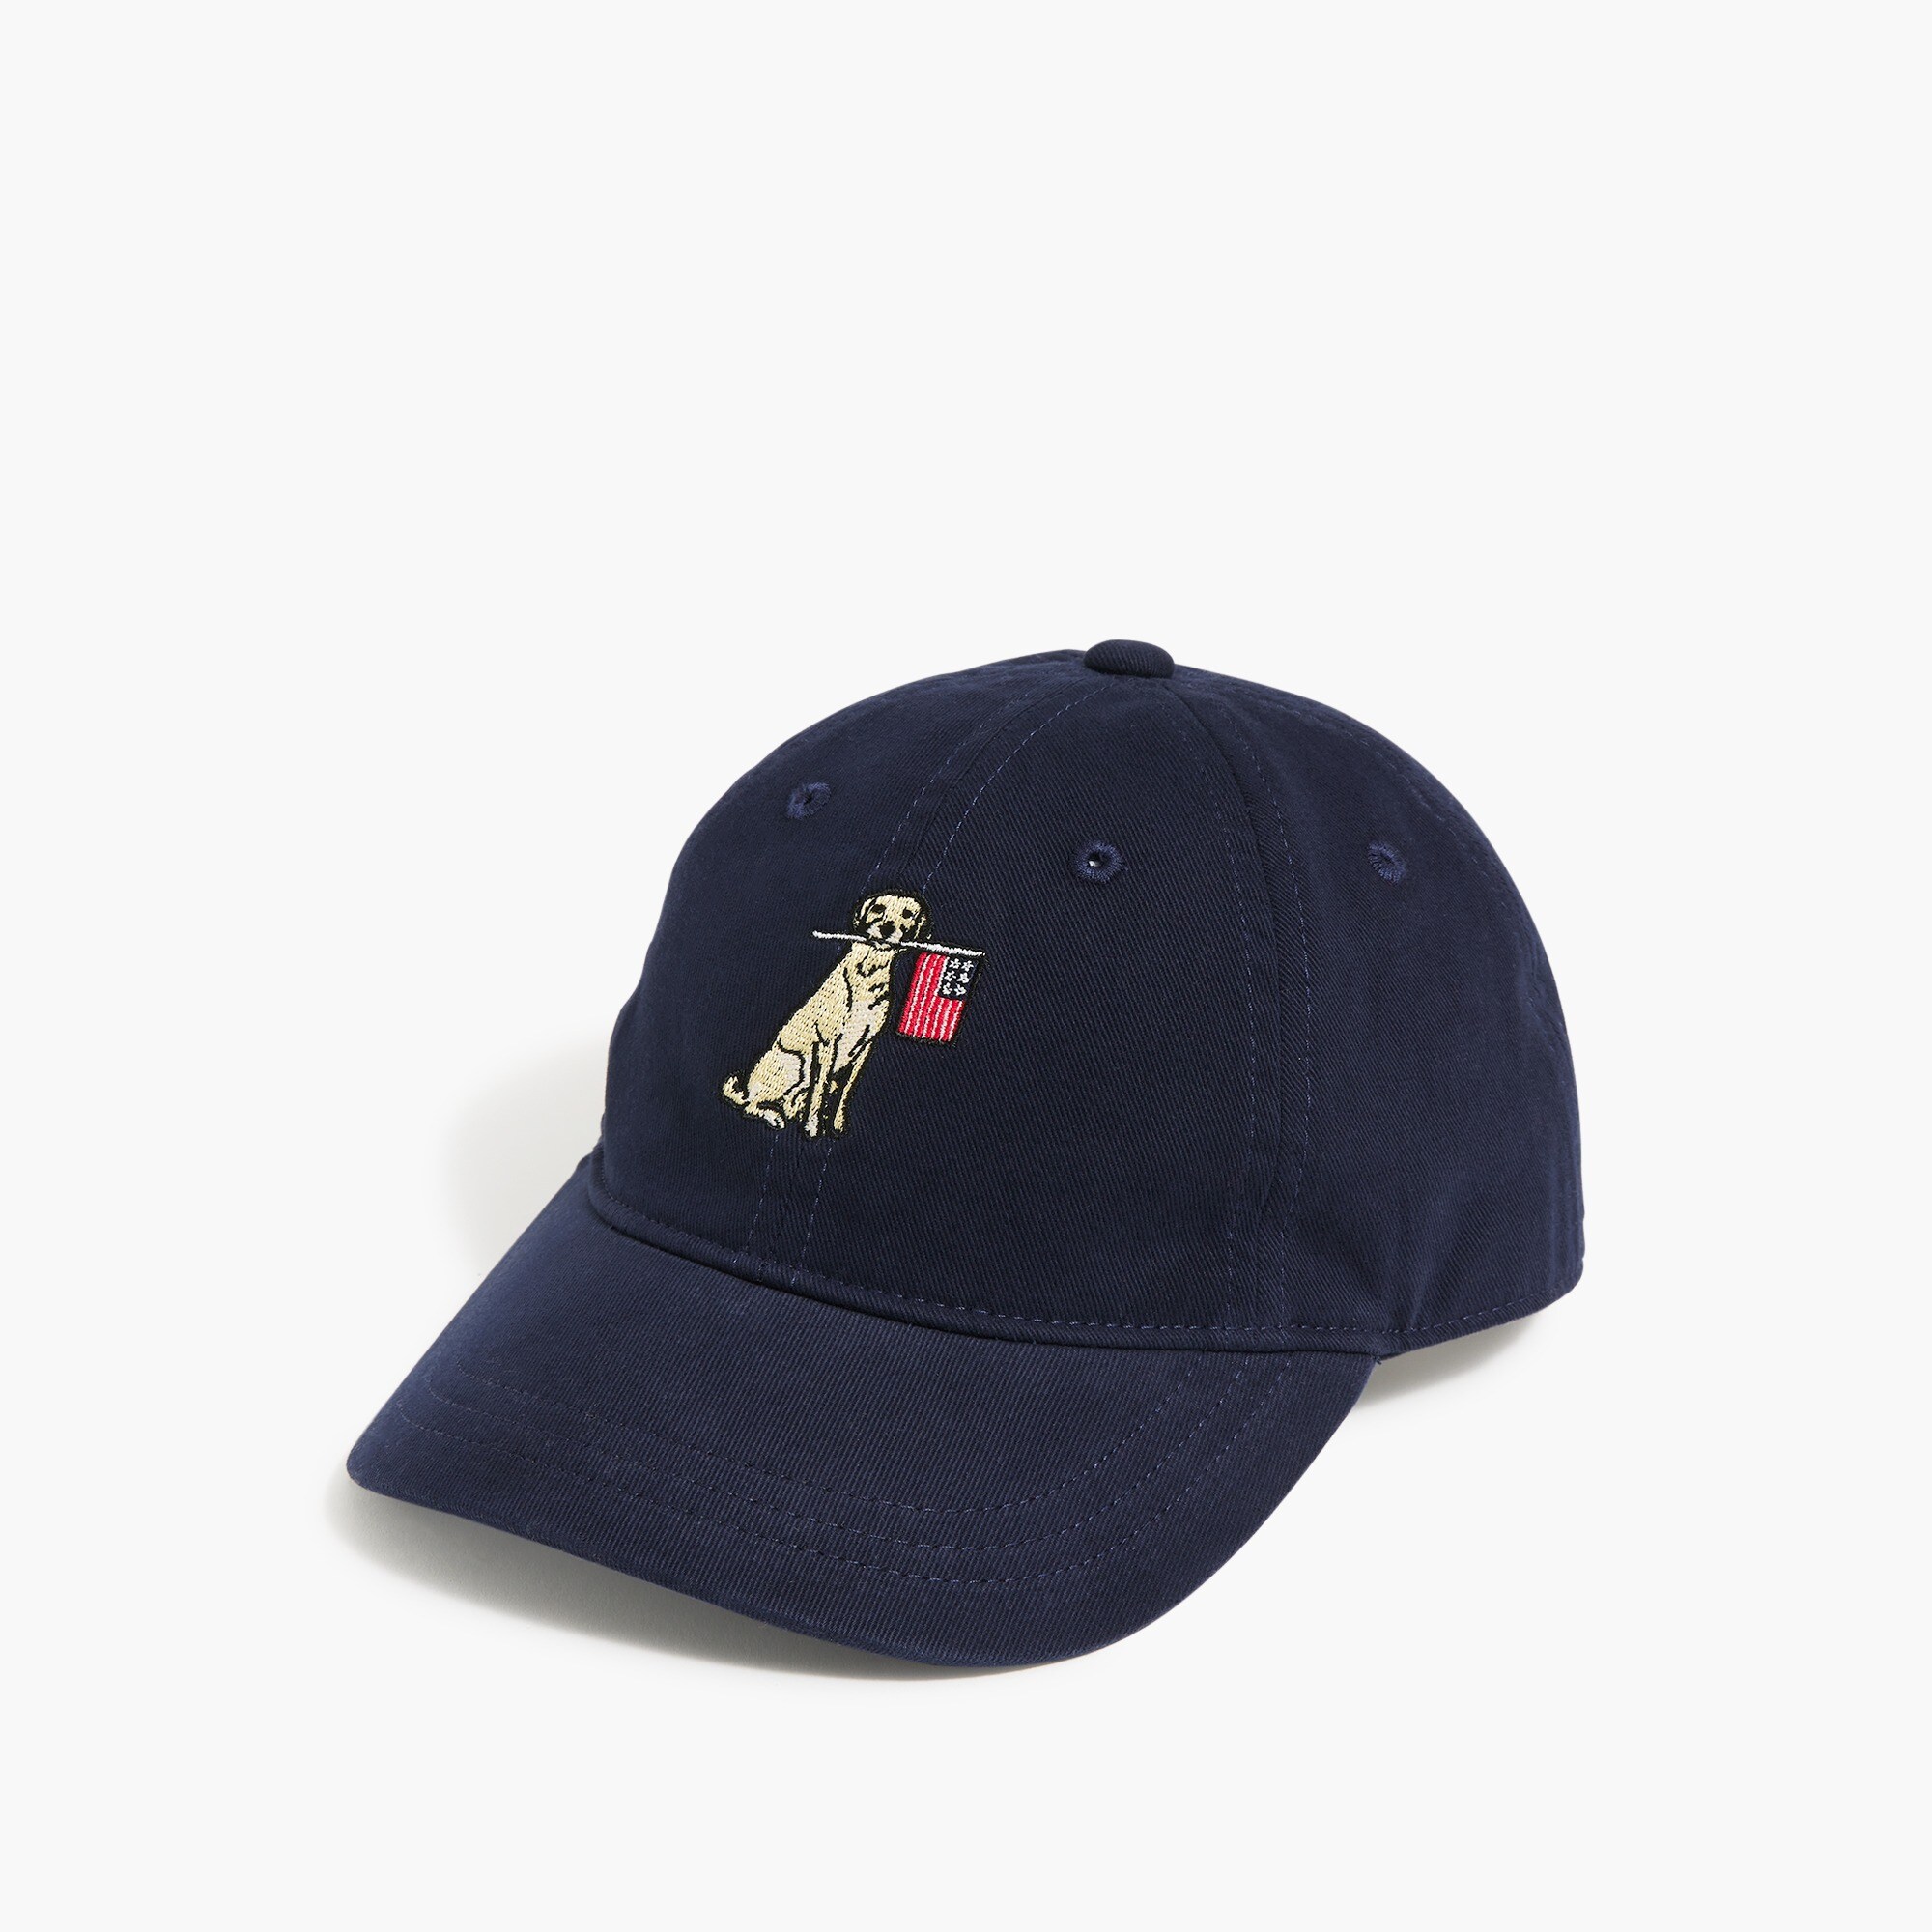  Kids' baseball cap